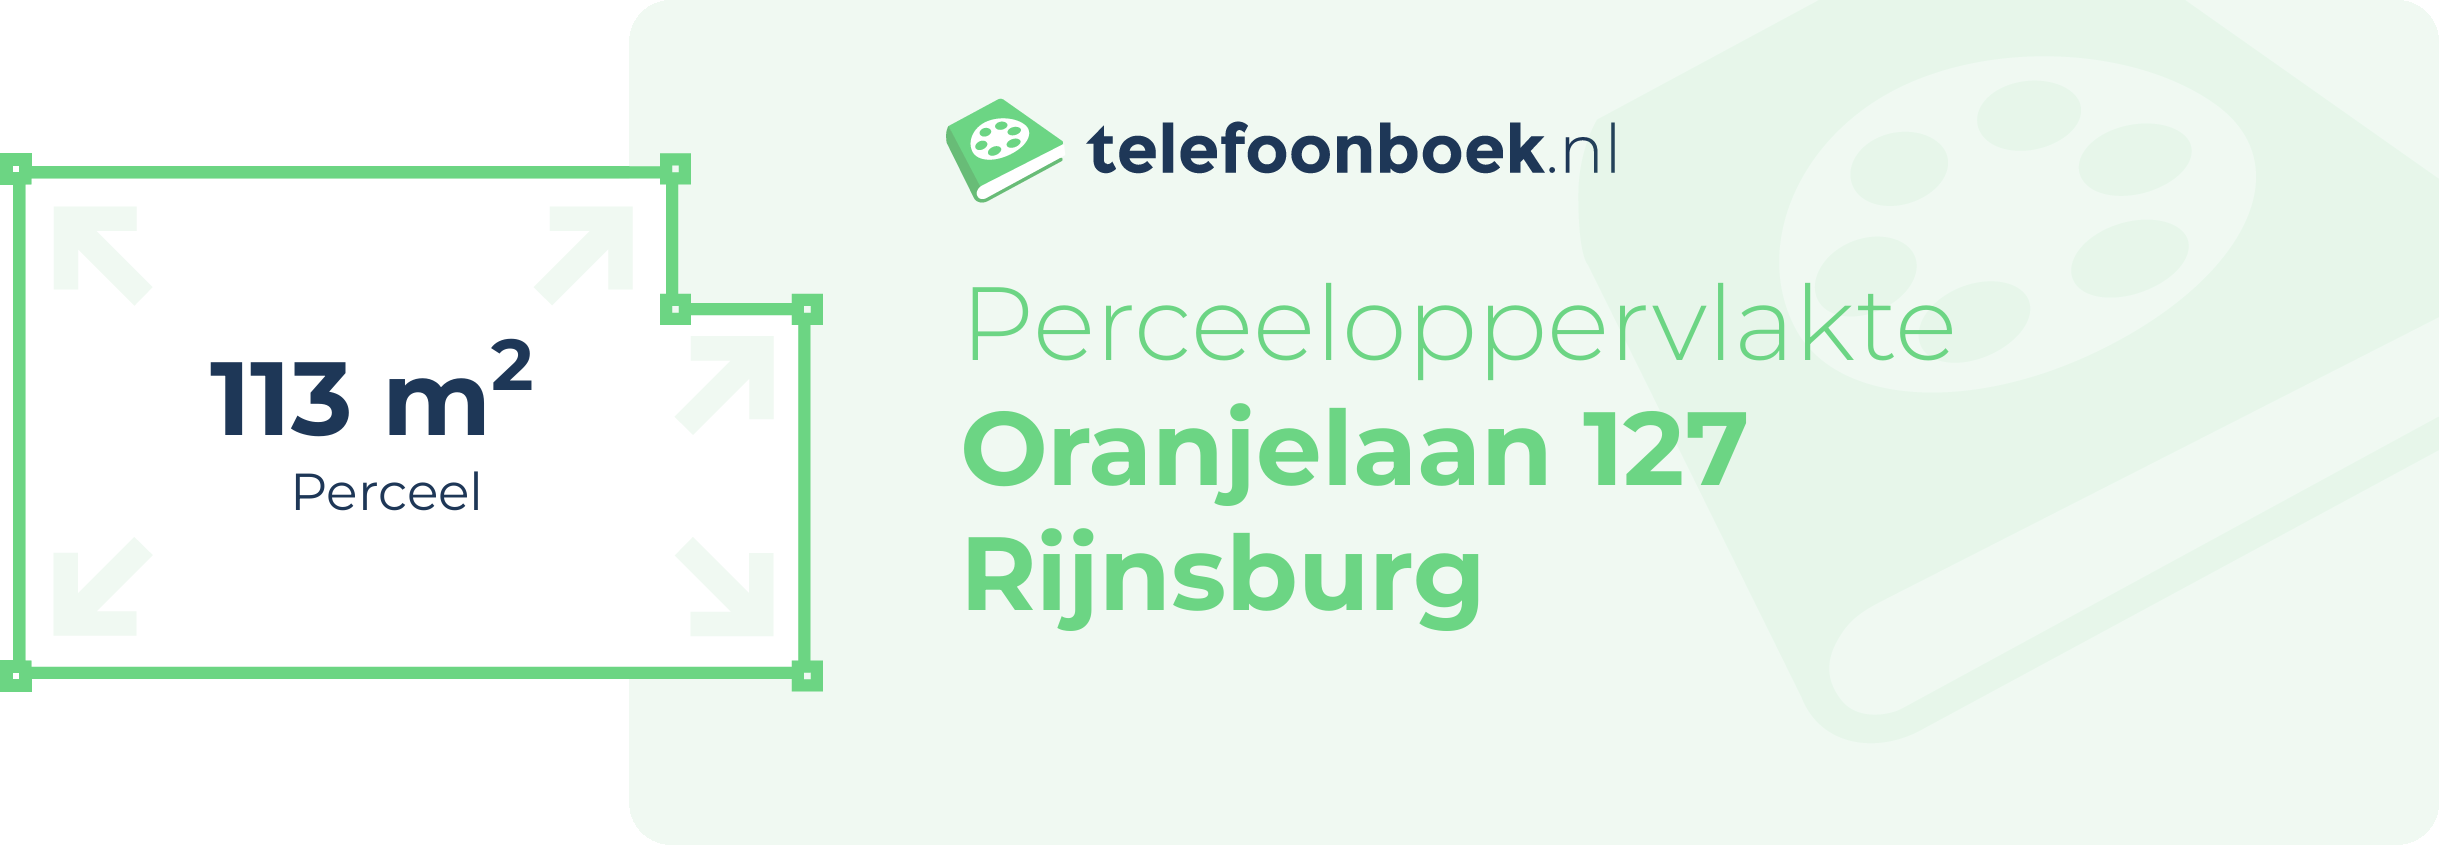 Perceeloppervlakte Oranjelaan 127 Rijnsburg